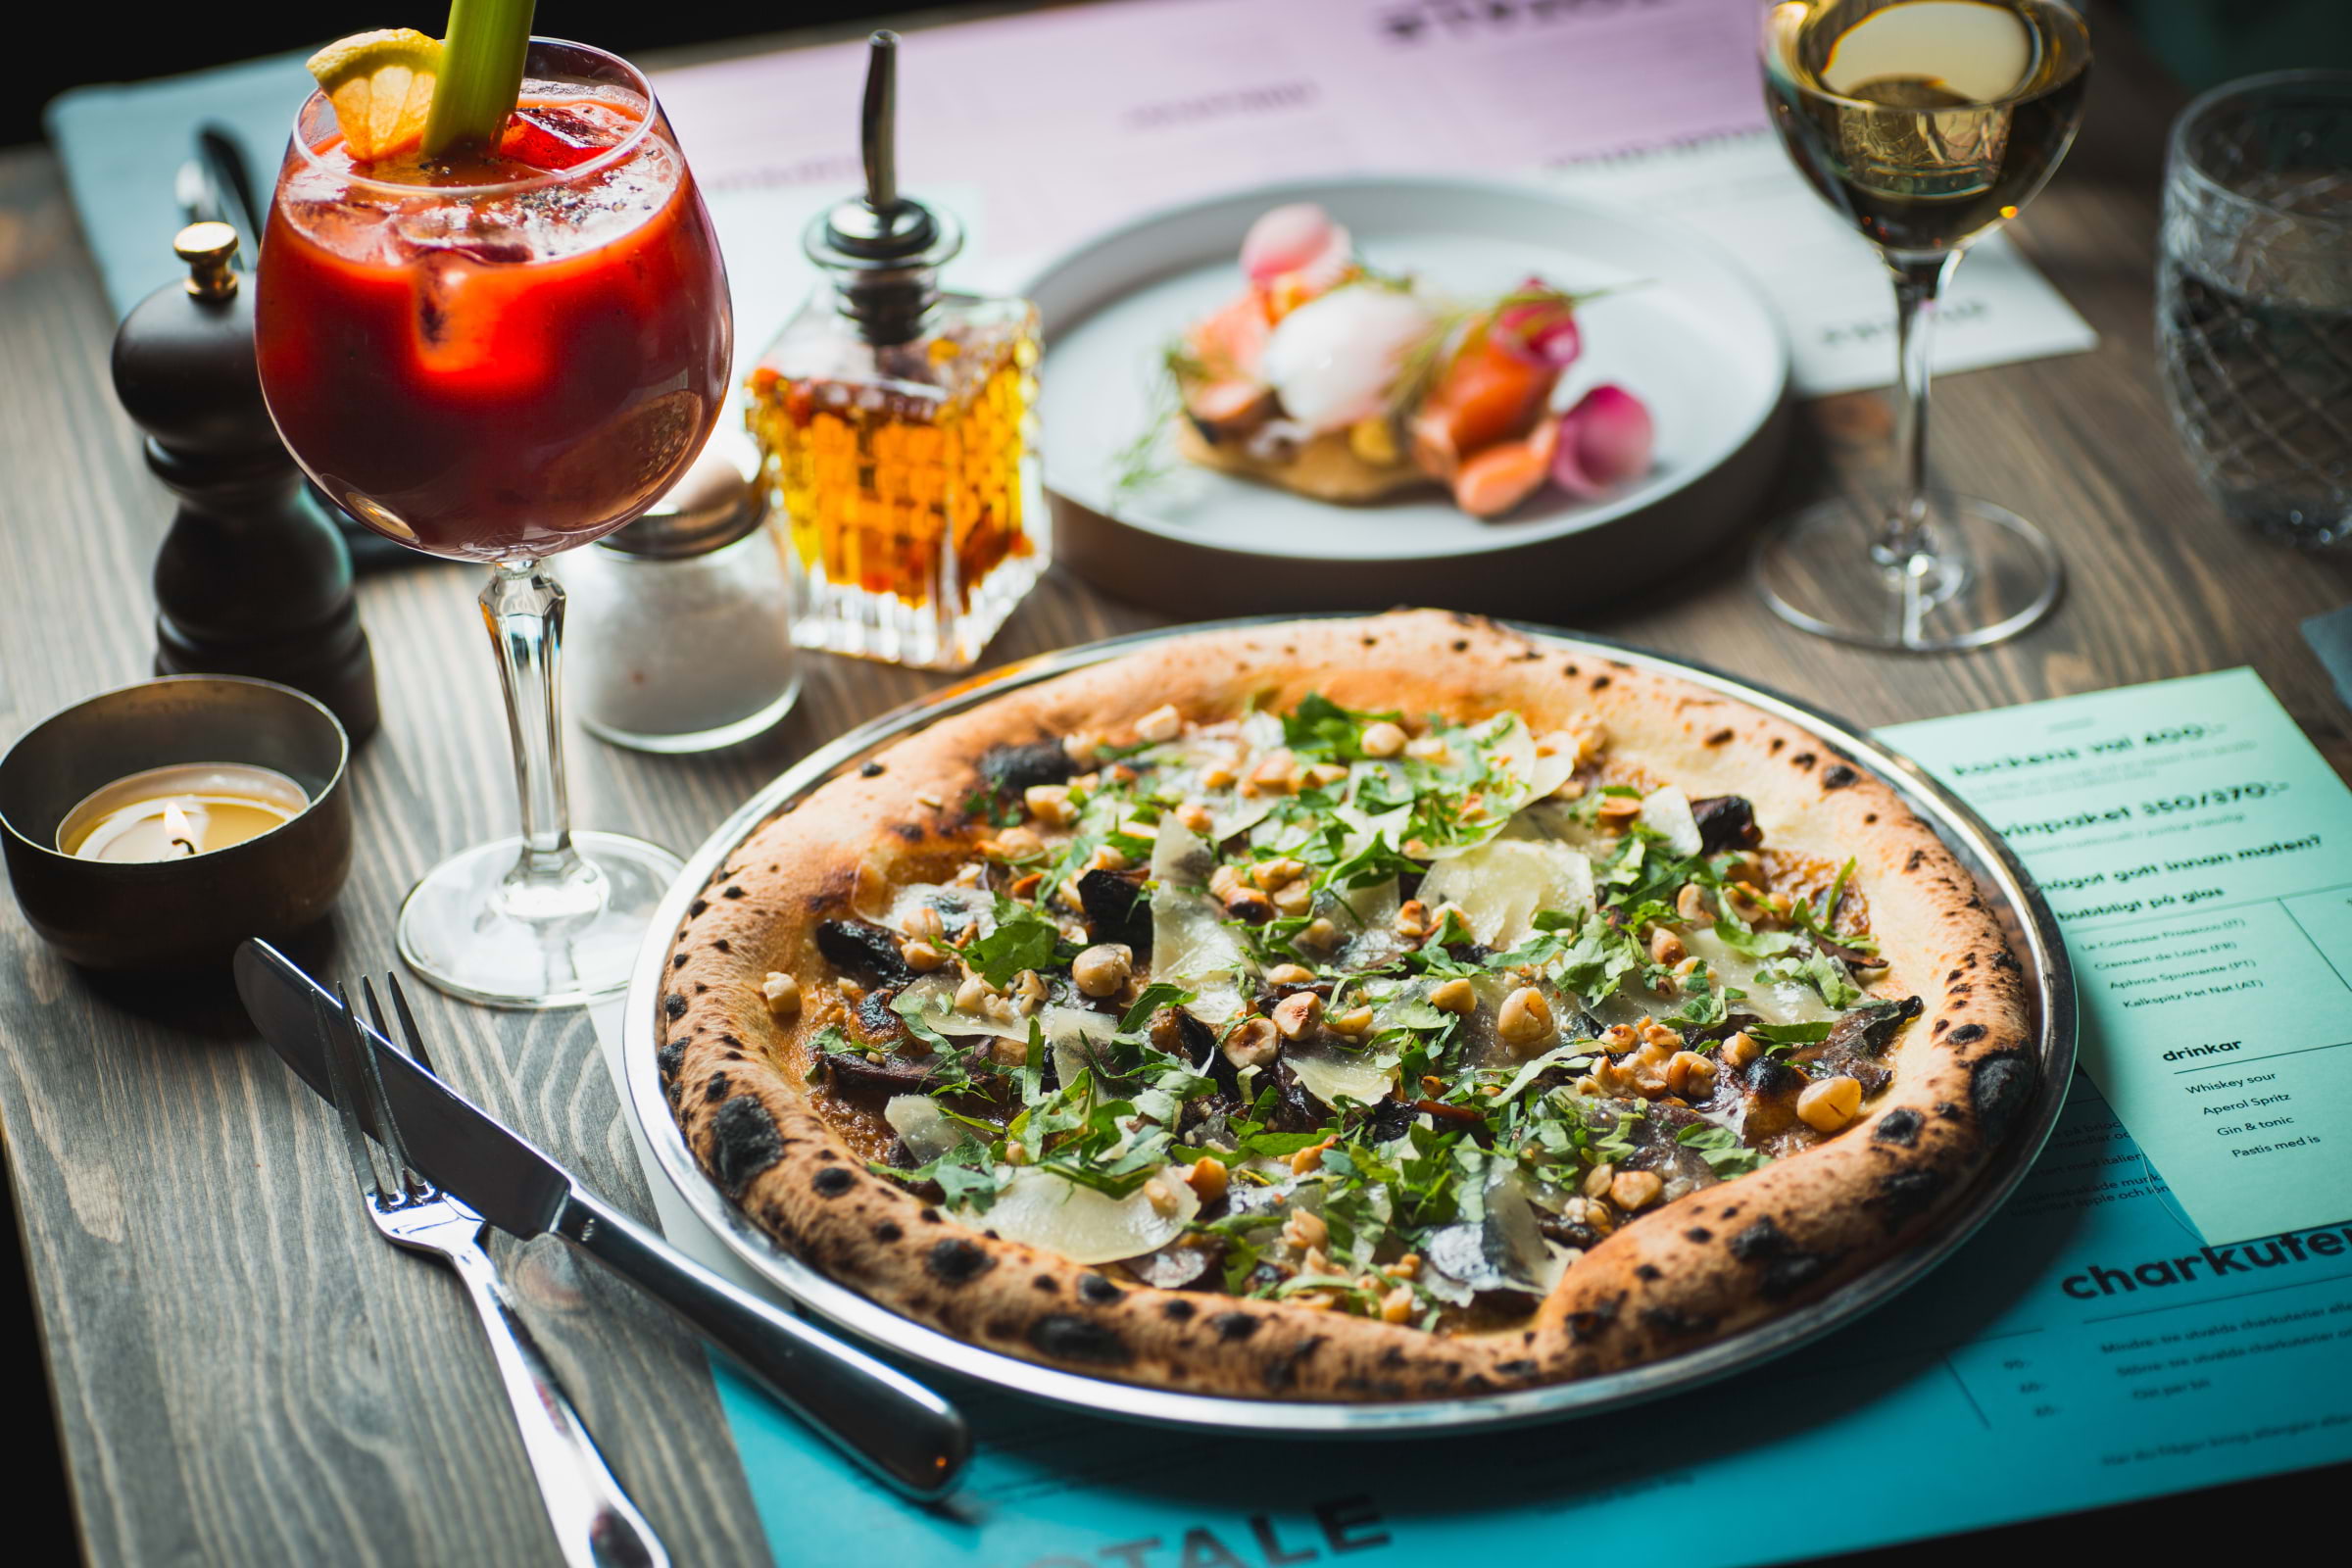 The guide to Gothenburg's best Italian restaurants